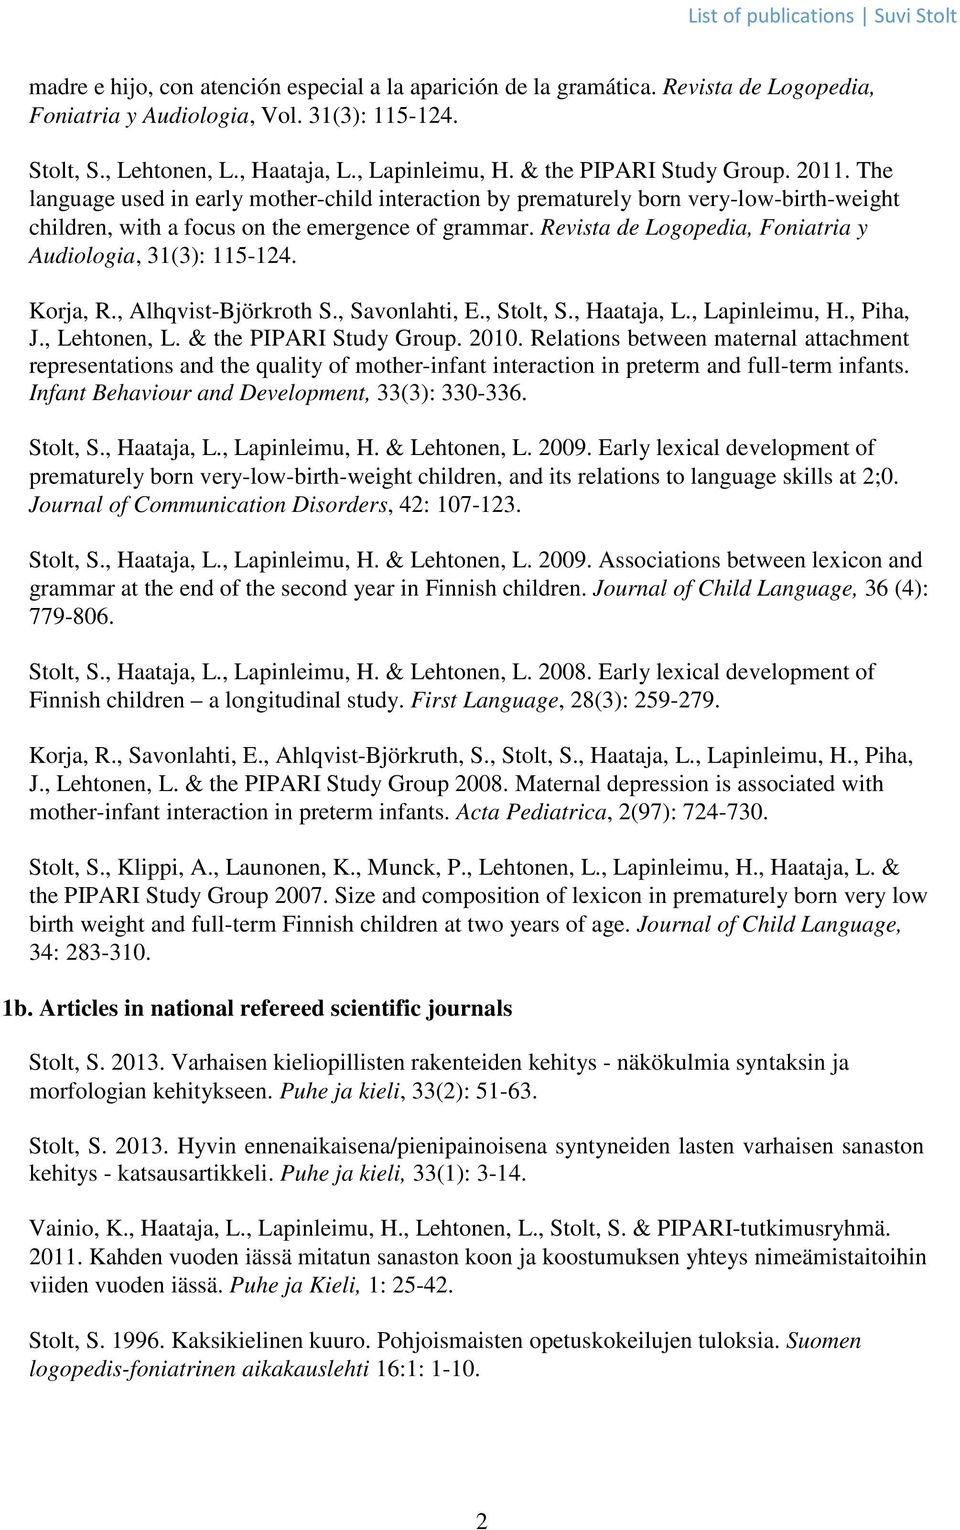 Revista de Logopedia, Foniatria y Audiologia, 31(3): 115-124. Korja, R., Alhqvist-Björkroth S., Savonlahti, E., Stolt, S., Haataja, L., Lapinleimu, H., Piha, J., Lehtonen, L. & the PIPARI Study Group.